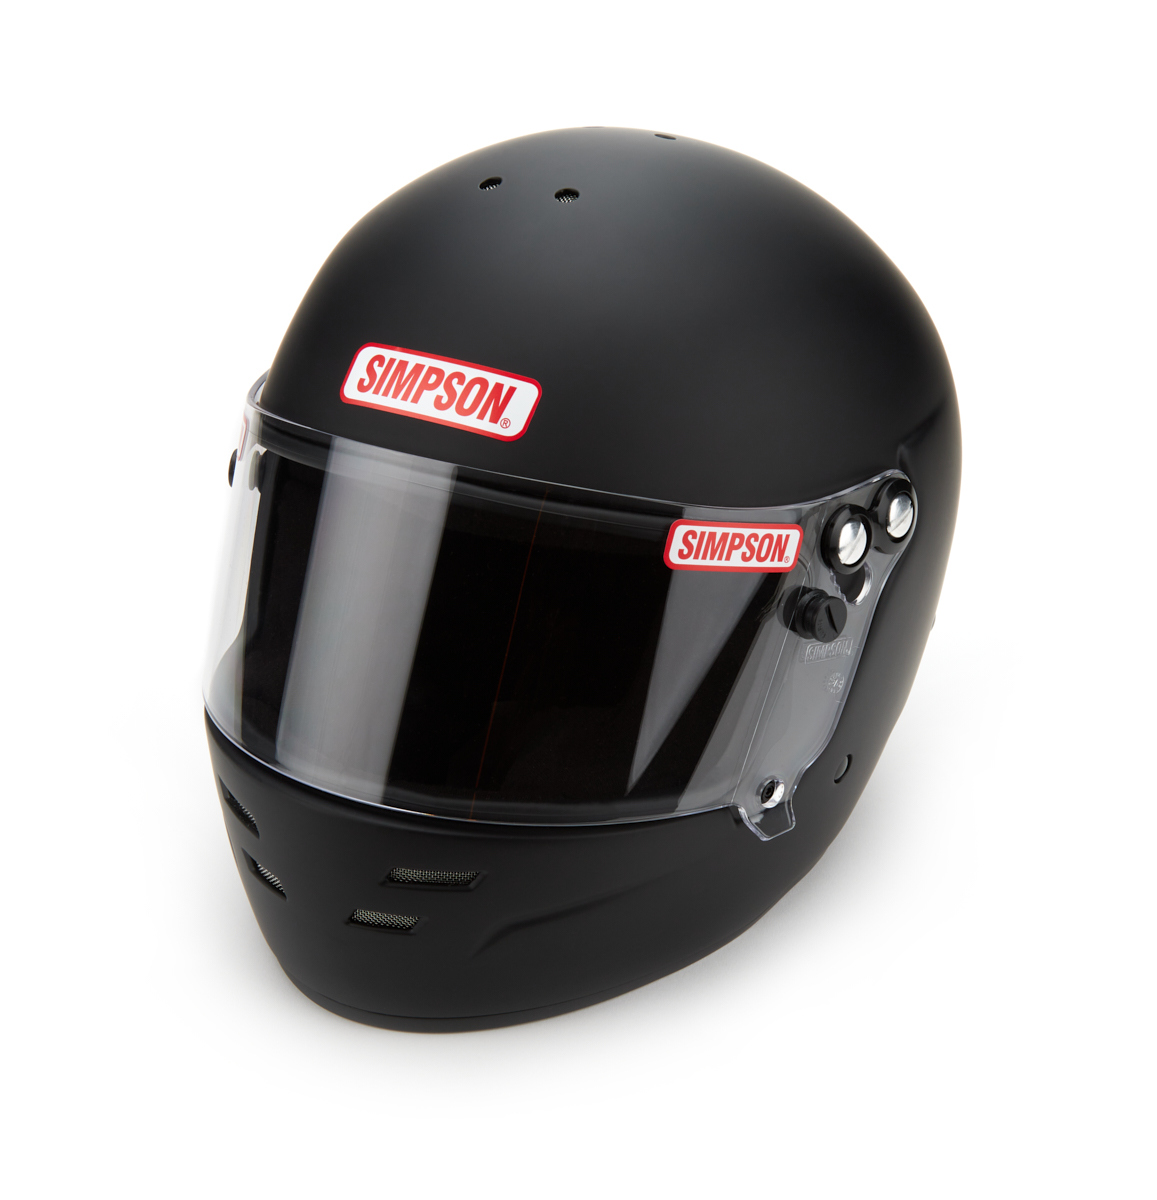 Helmet - Viper - Full Face - Snell SA2020 - Head and Neck Support Ready - Flat Black - Medium - Each